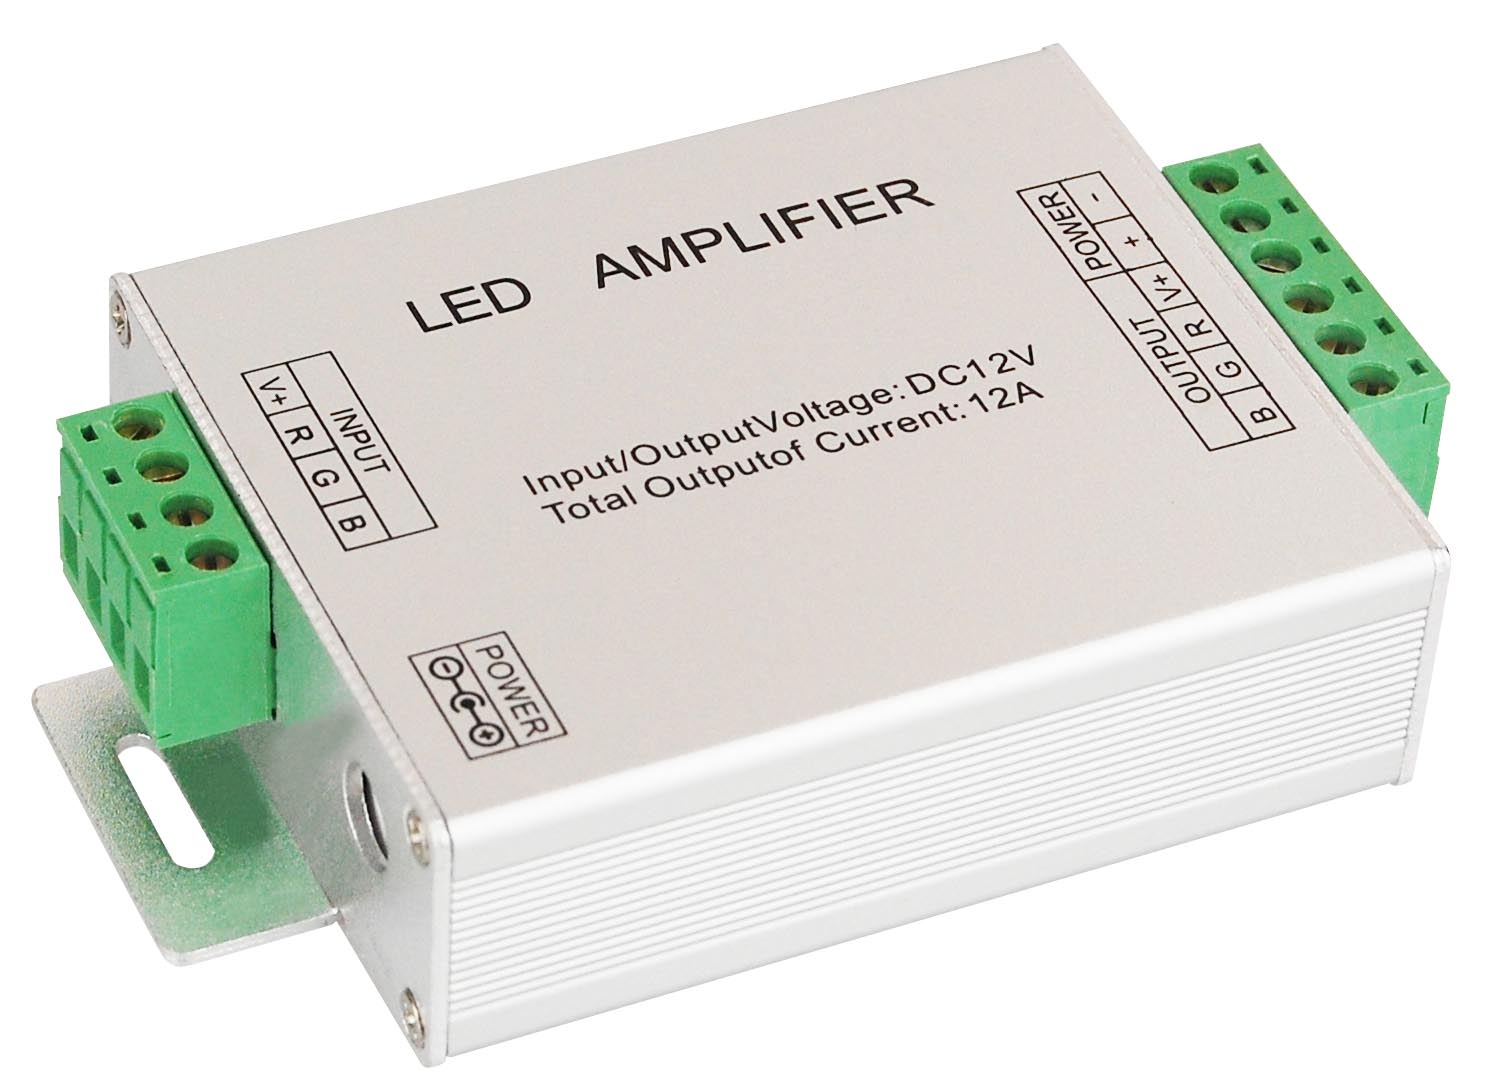 LED Repeater zu Verlängerung von LED-Beleuchtungen.